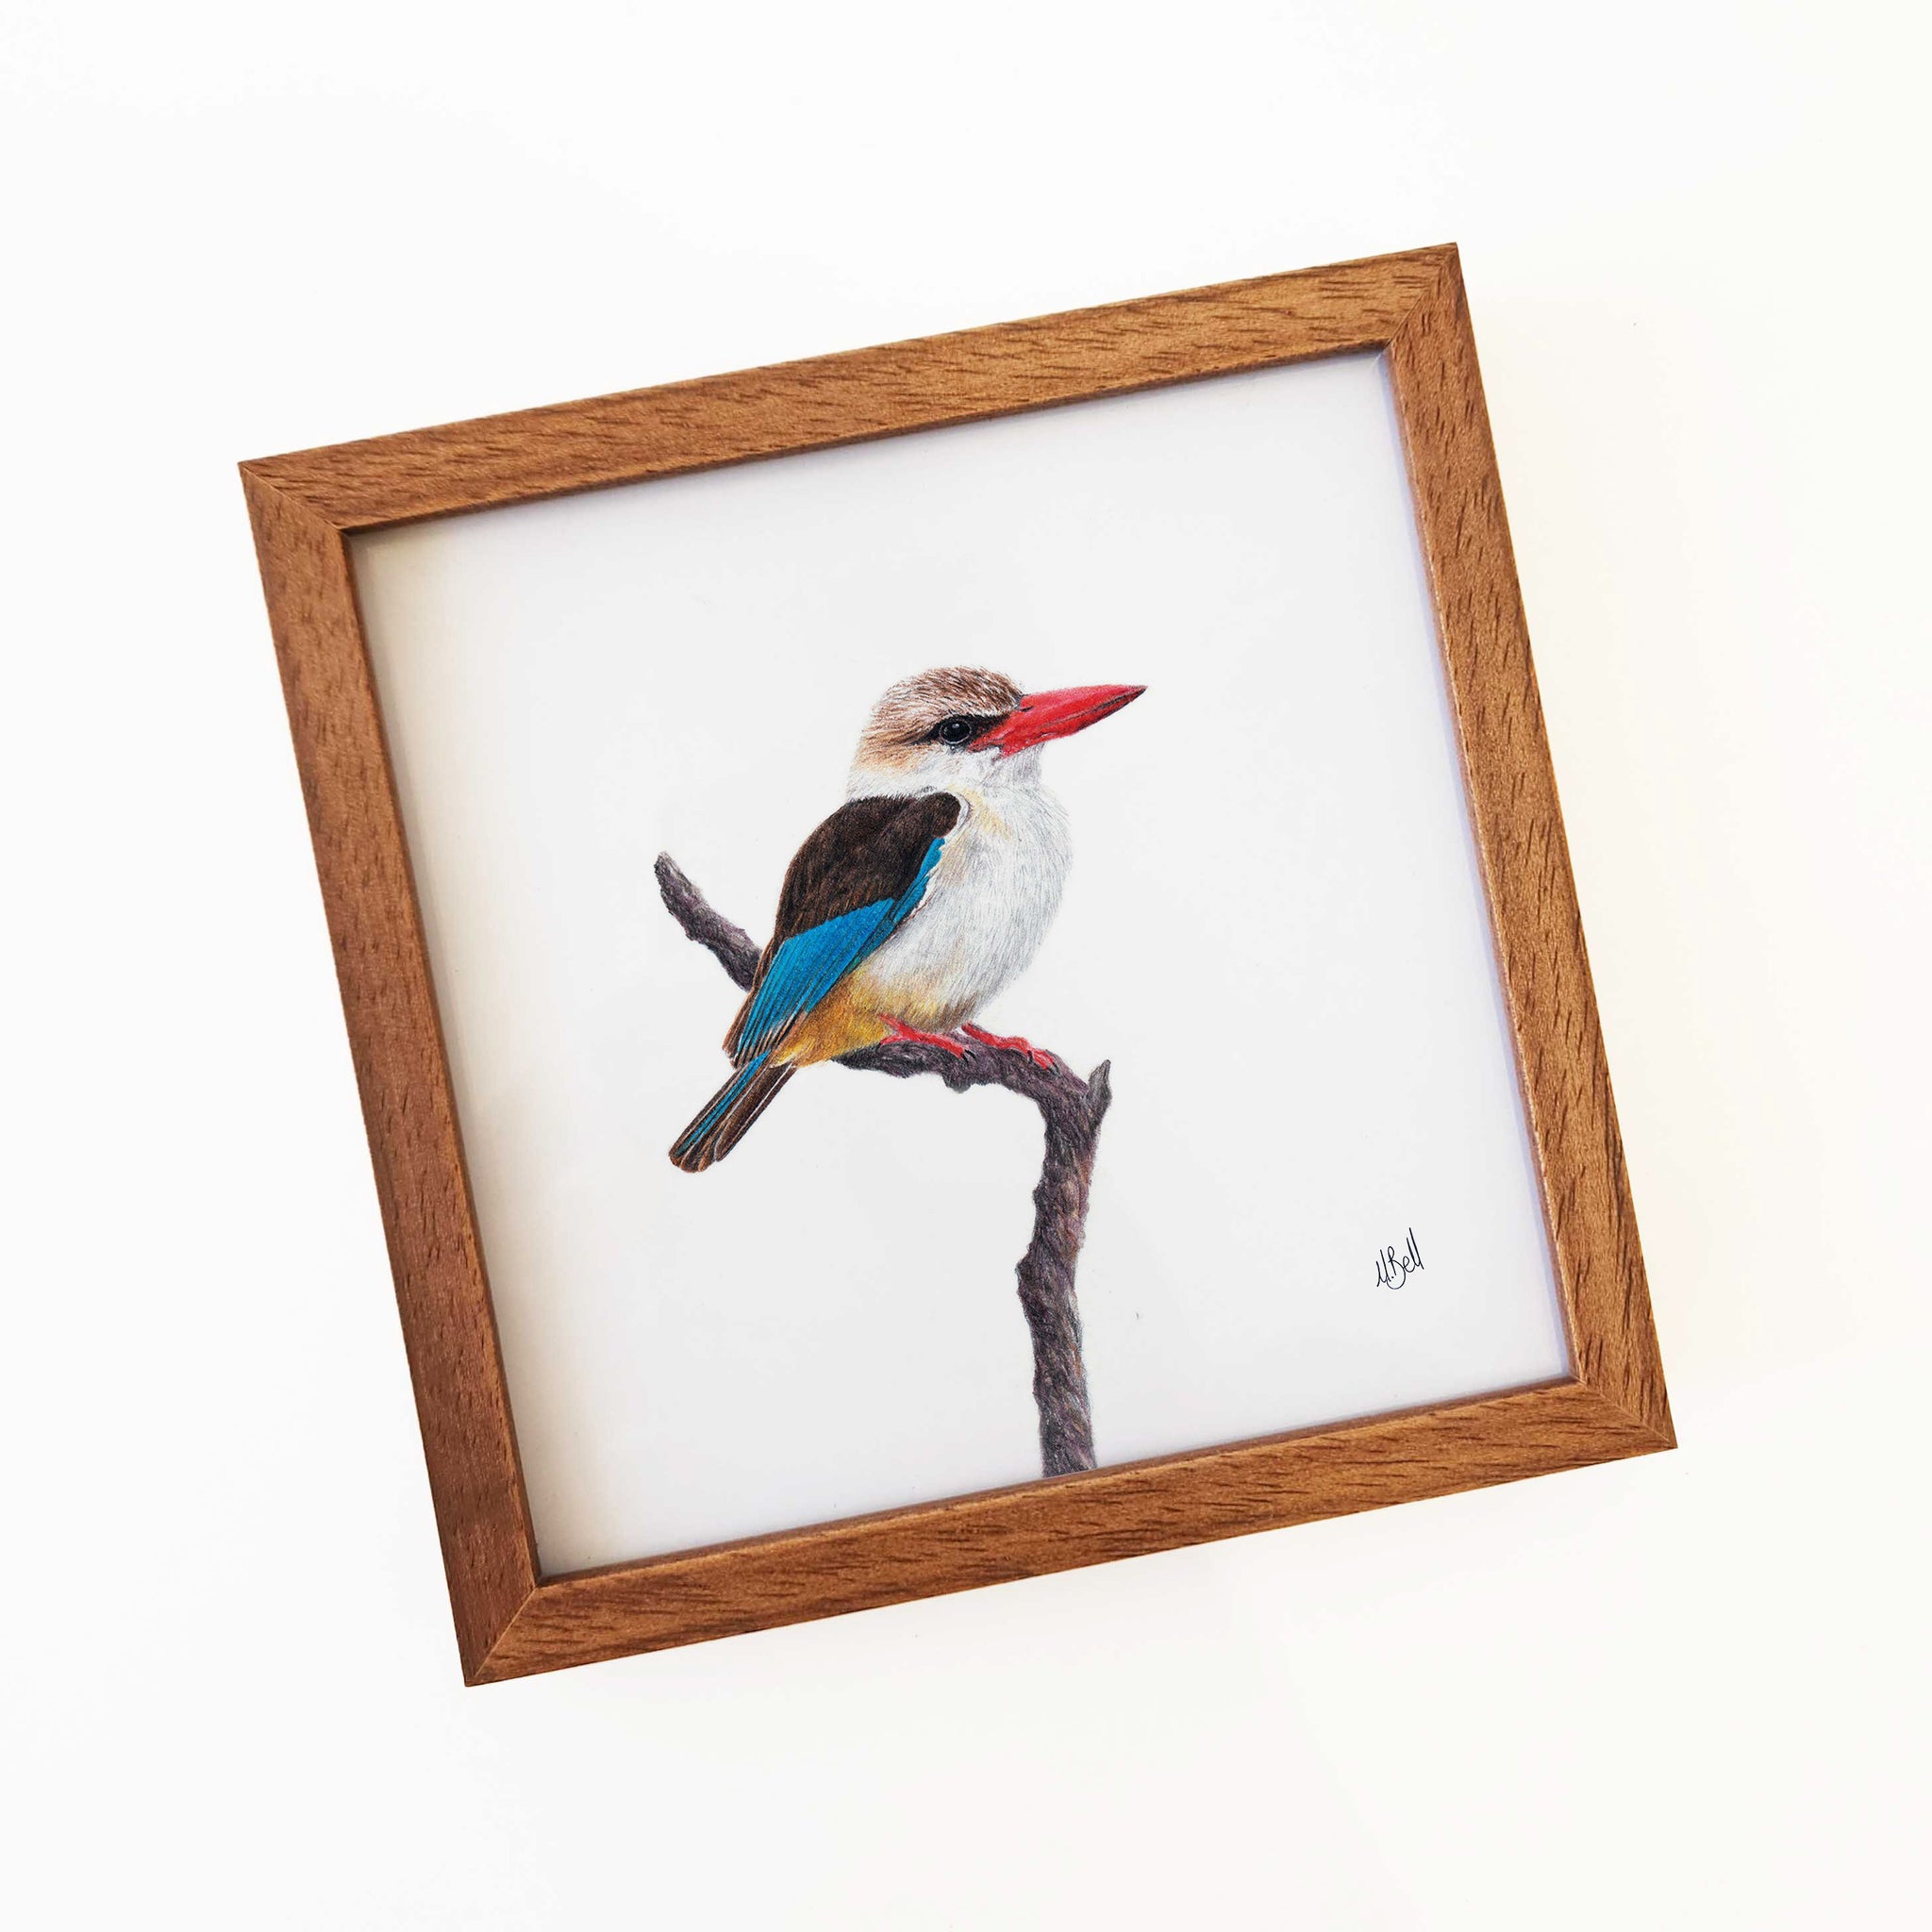 Kiaat wood framed miniature artwork of a Brown Hooded Kingfisher, part of wildlife artist Matthew Bell's birds of South Africa gallery